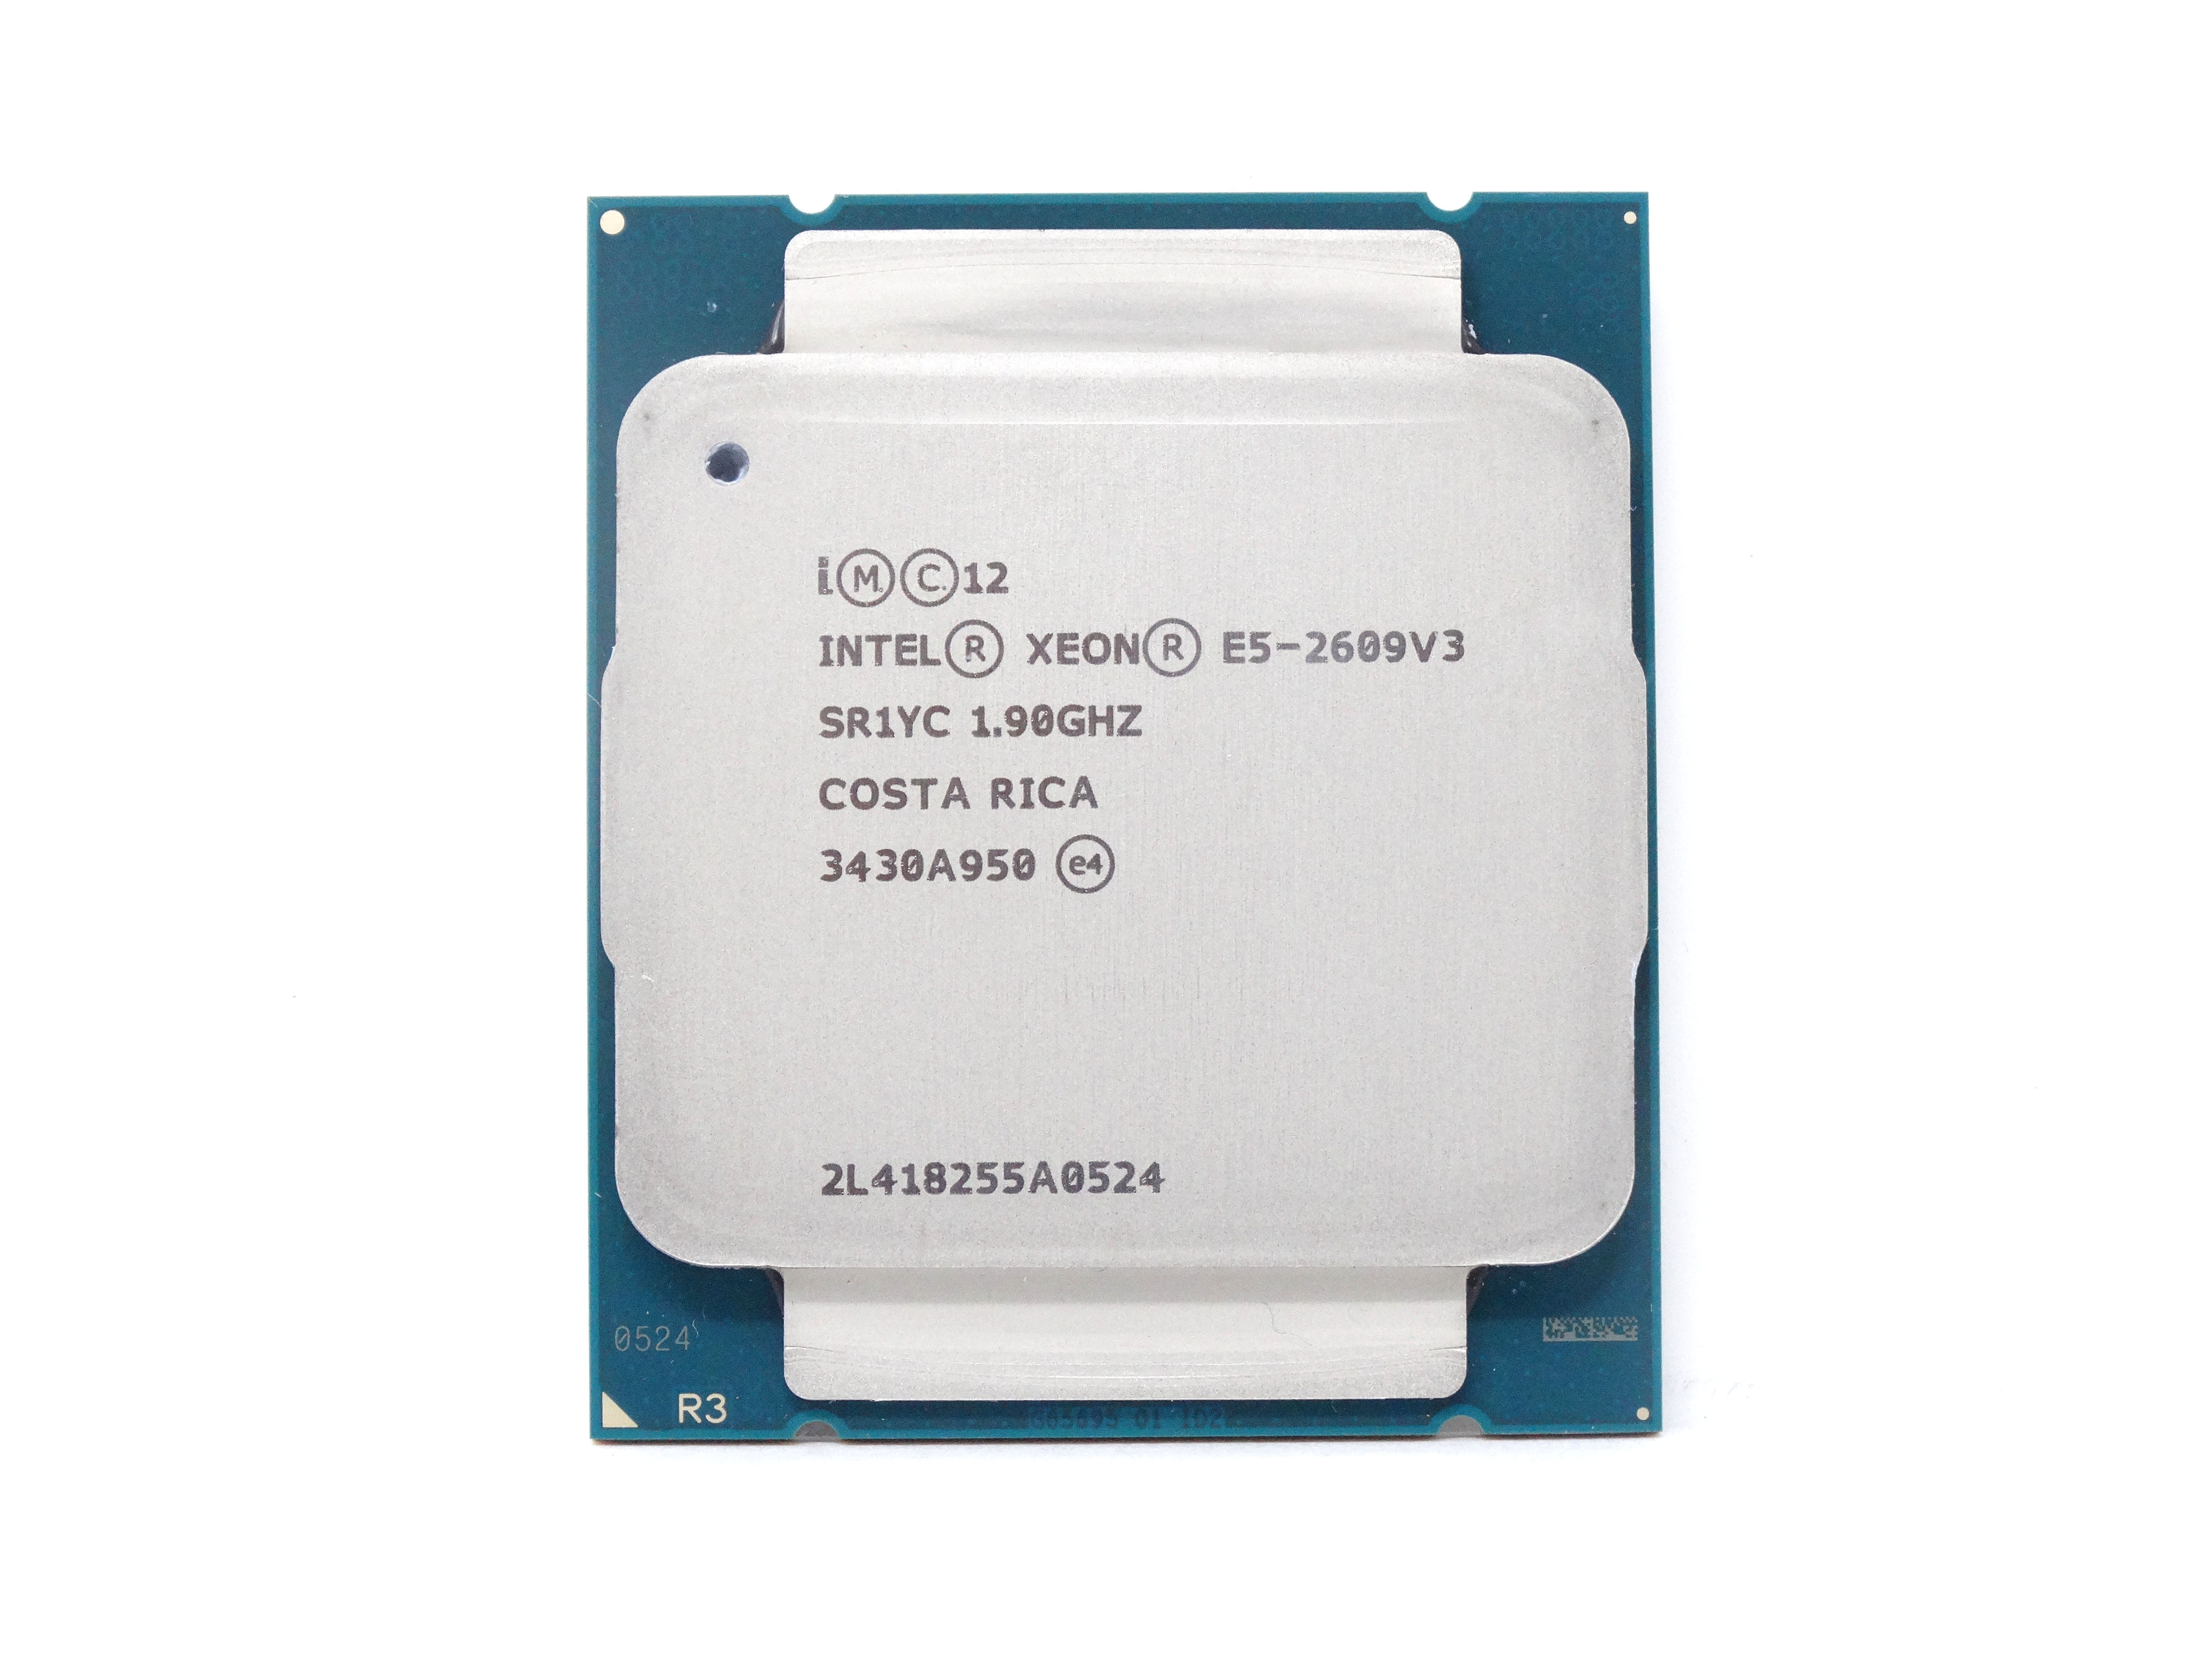 Intel Xeon E5-2609v3 1.9GHz 6 Core 15MB LGA2011 CPU Processor (SR1YC)